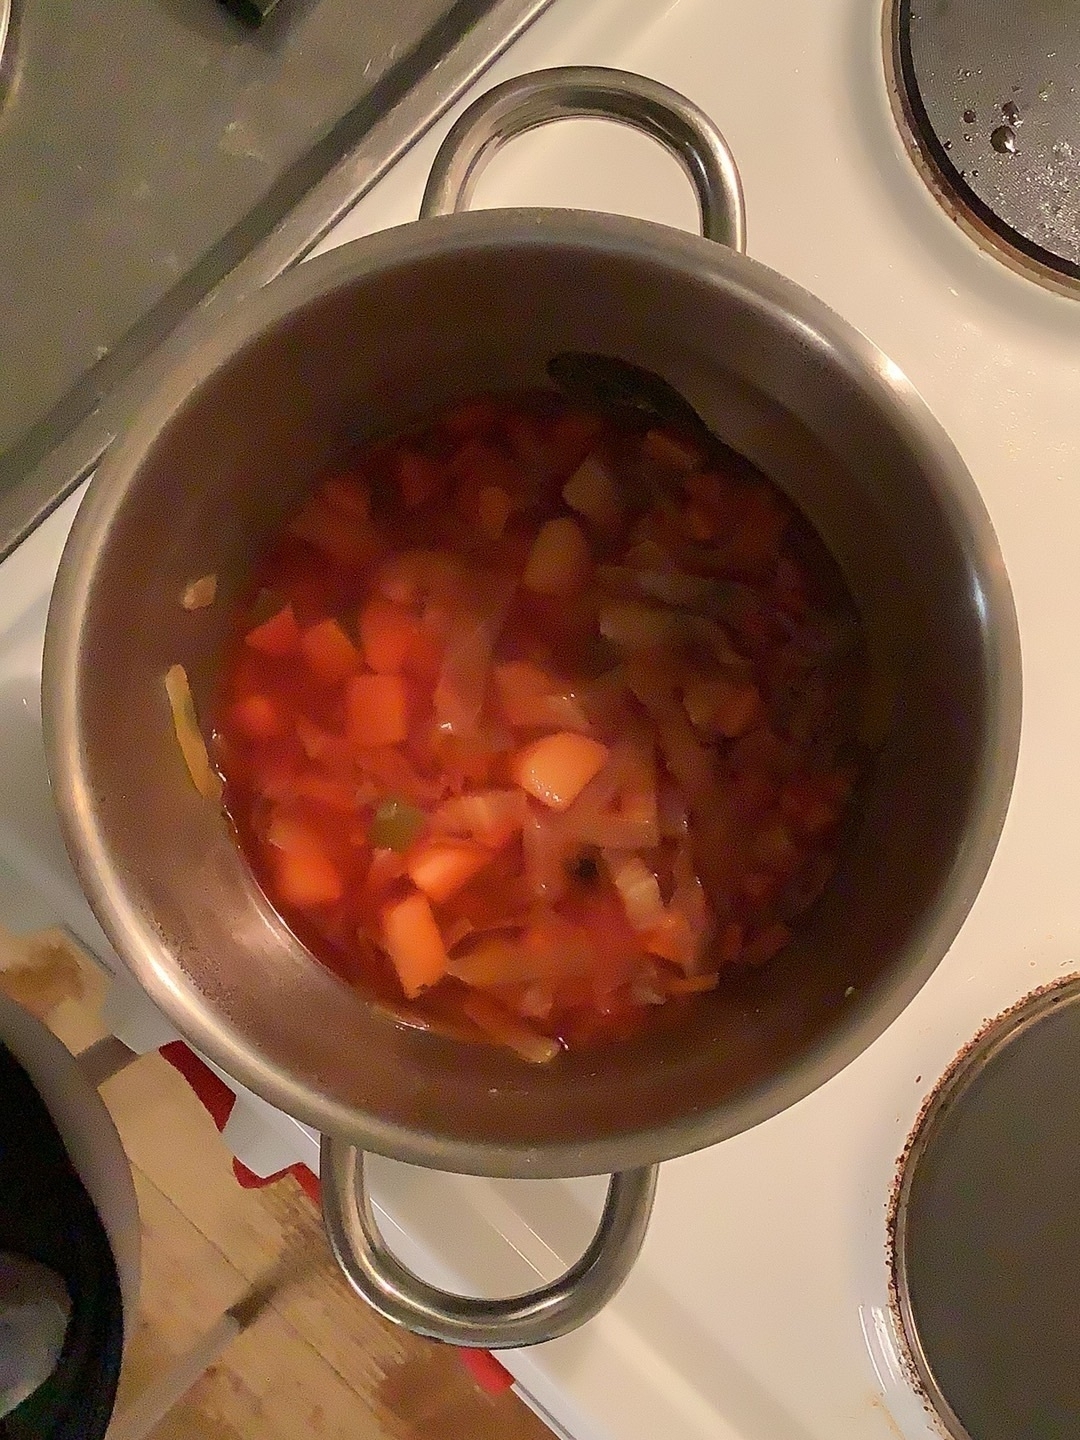 borsch being prepared in a pan